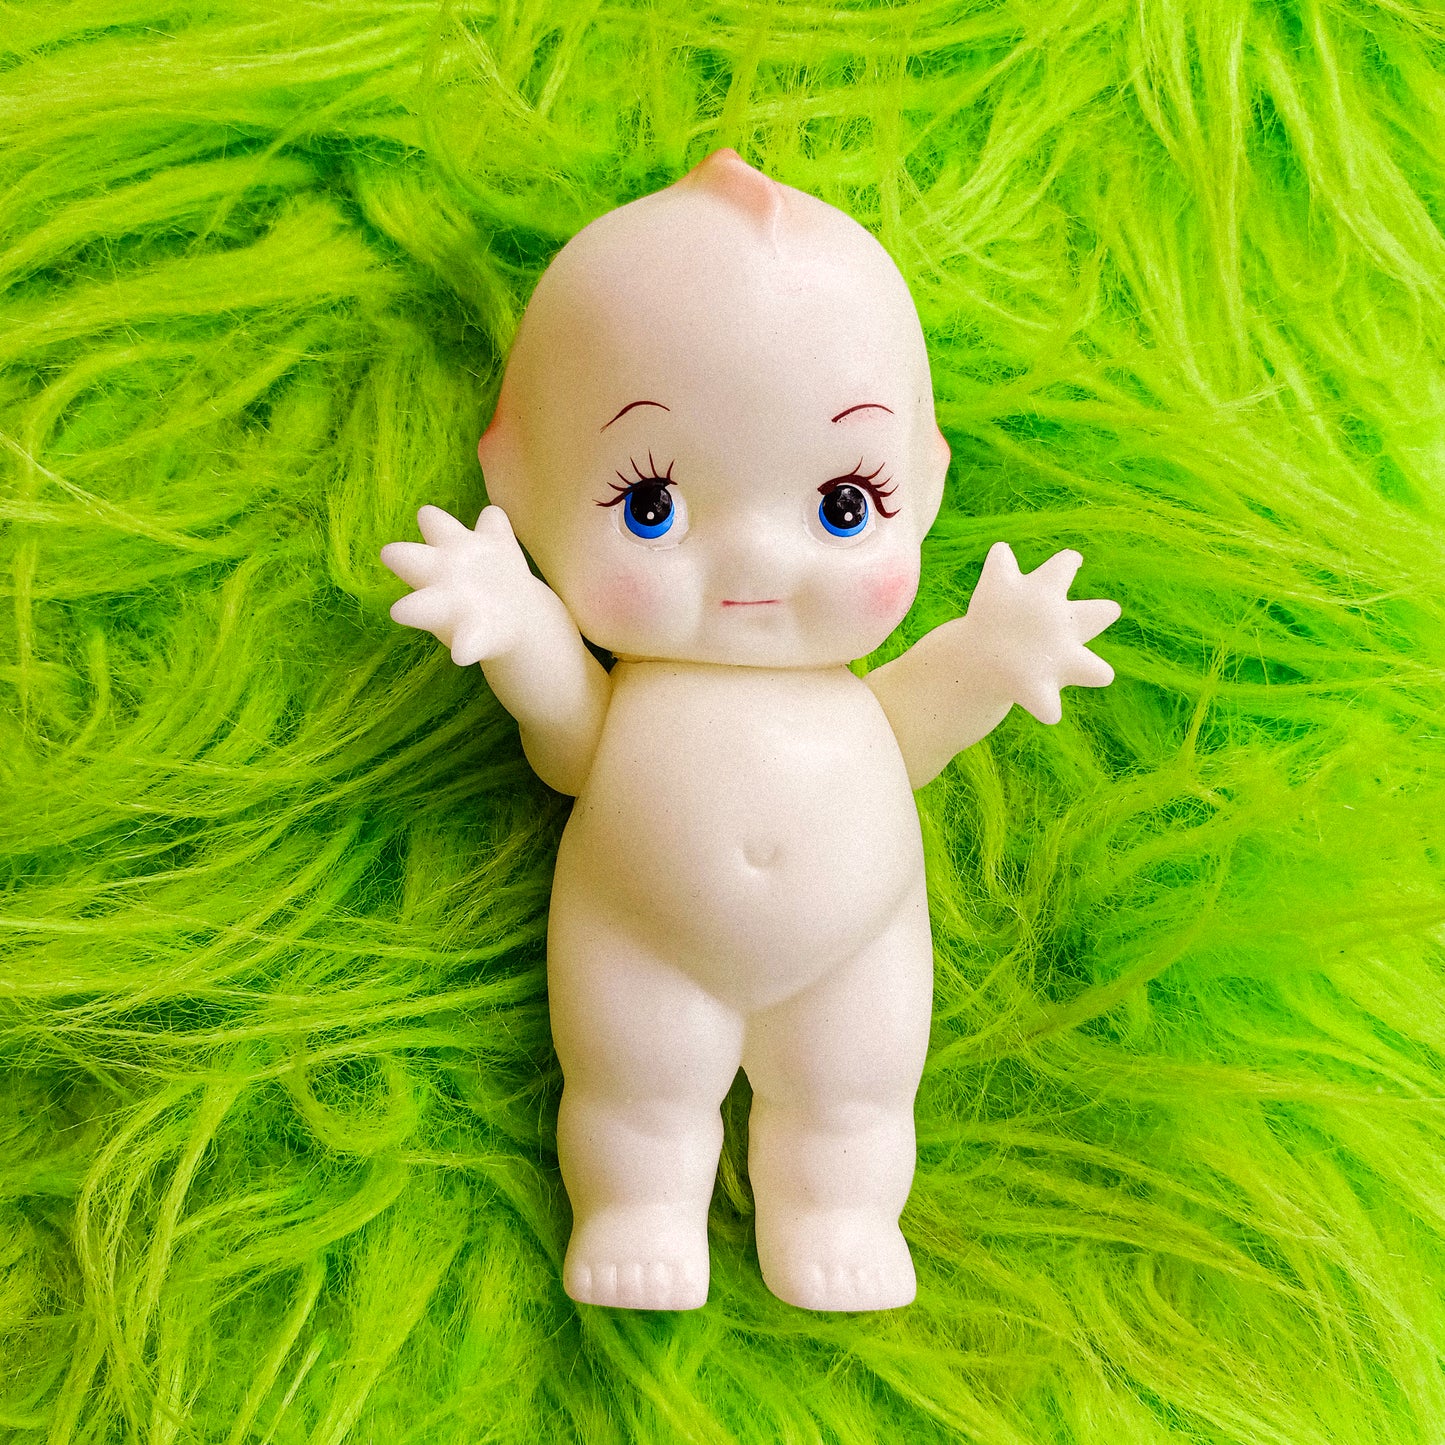 Juguete Kewpie Doll edición limitada - Iasumi